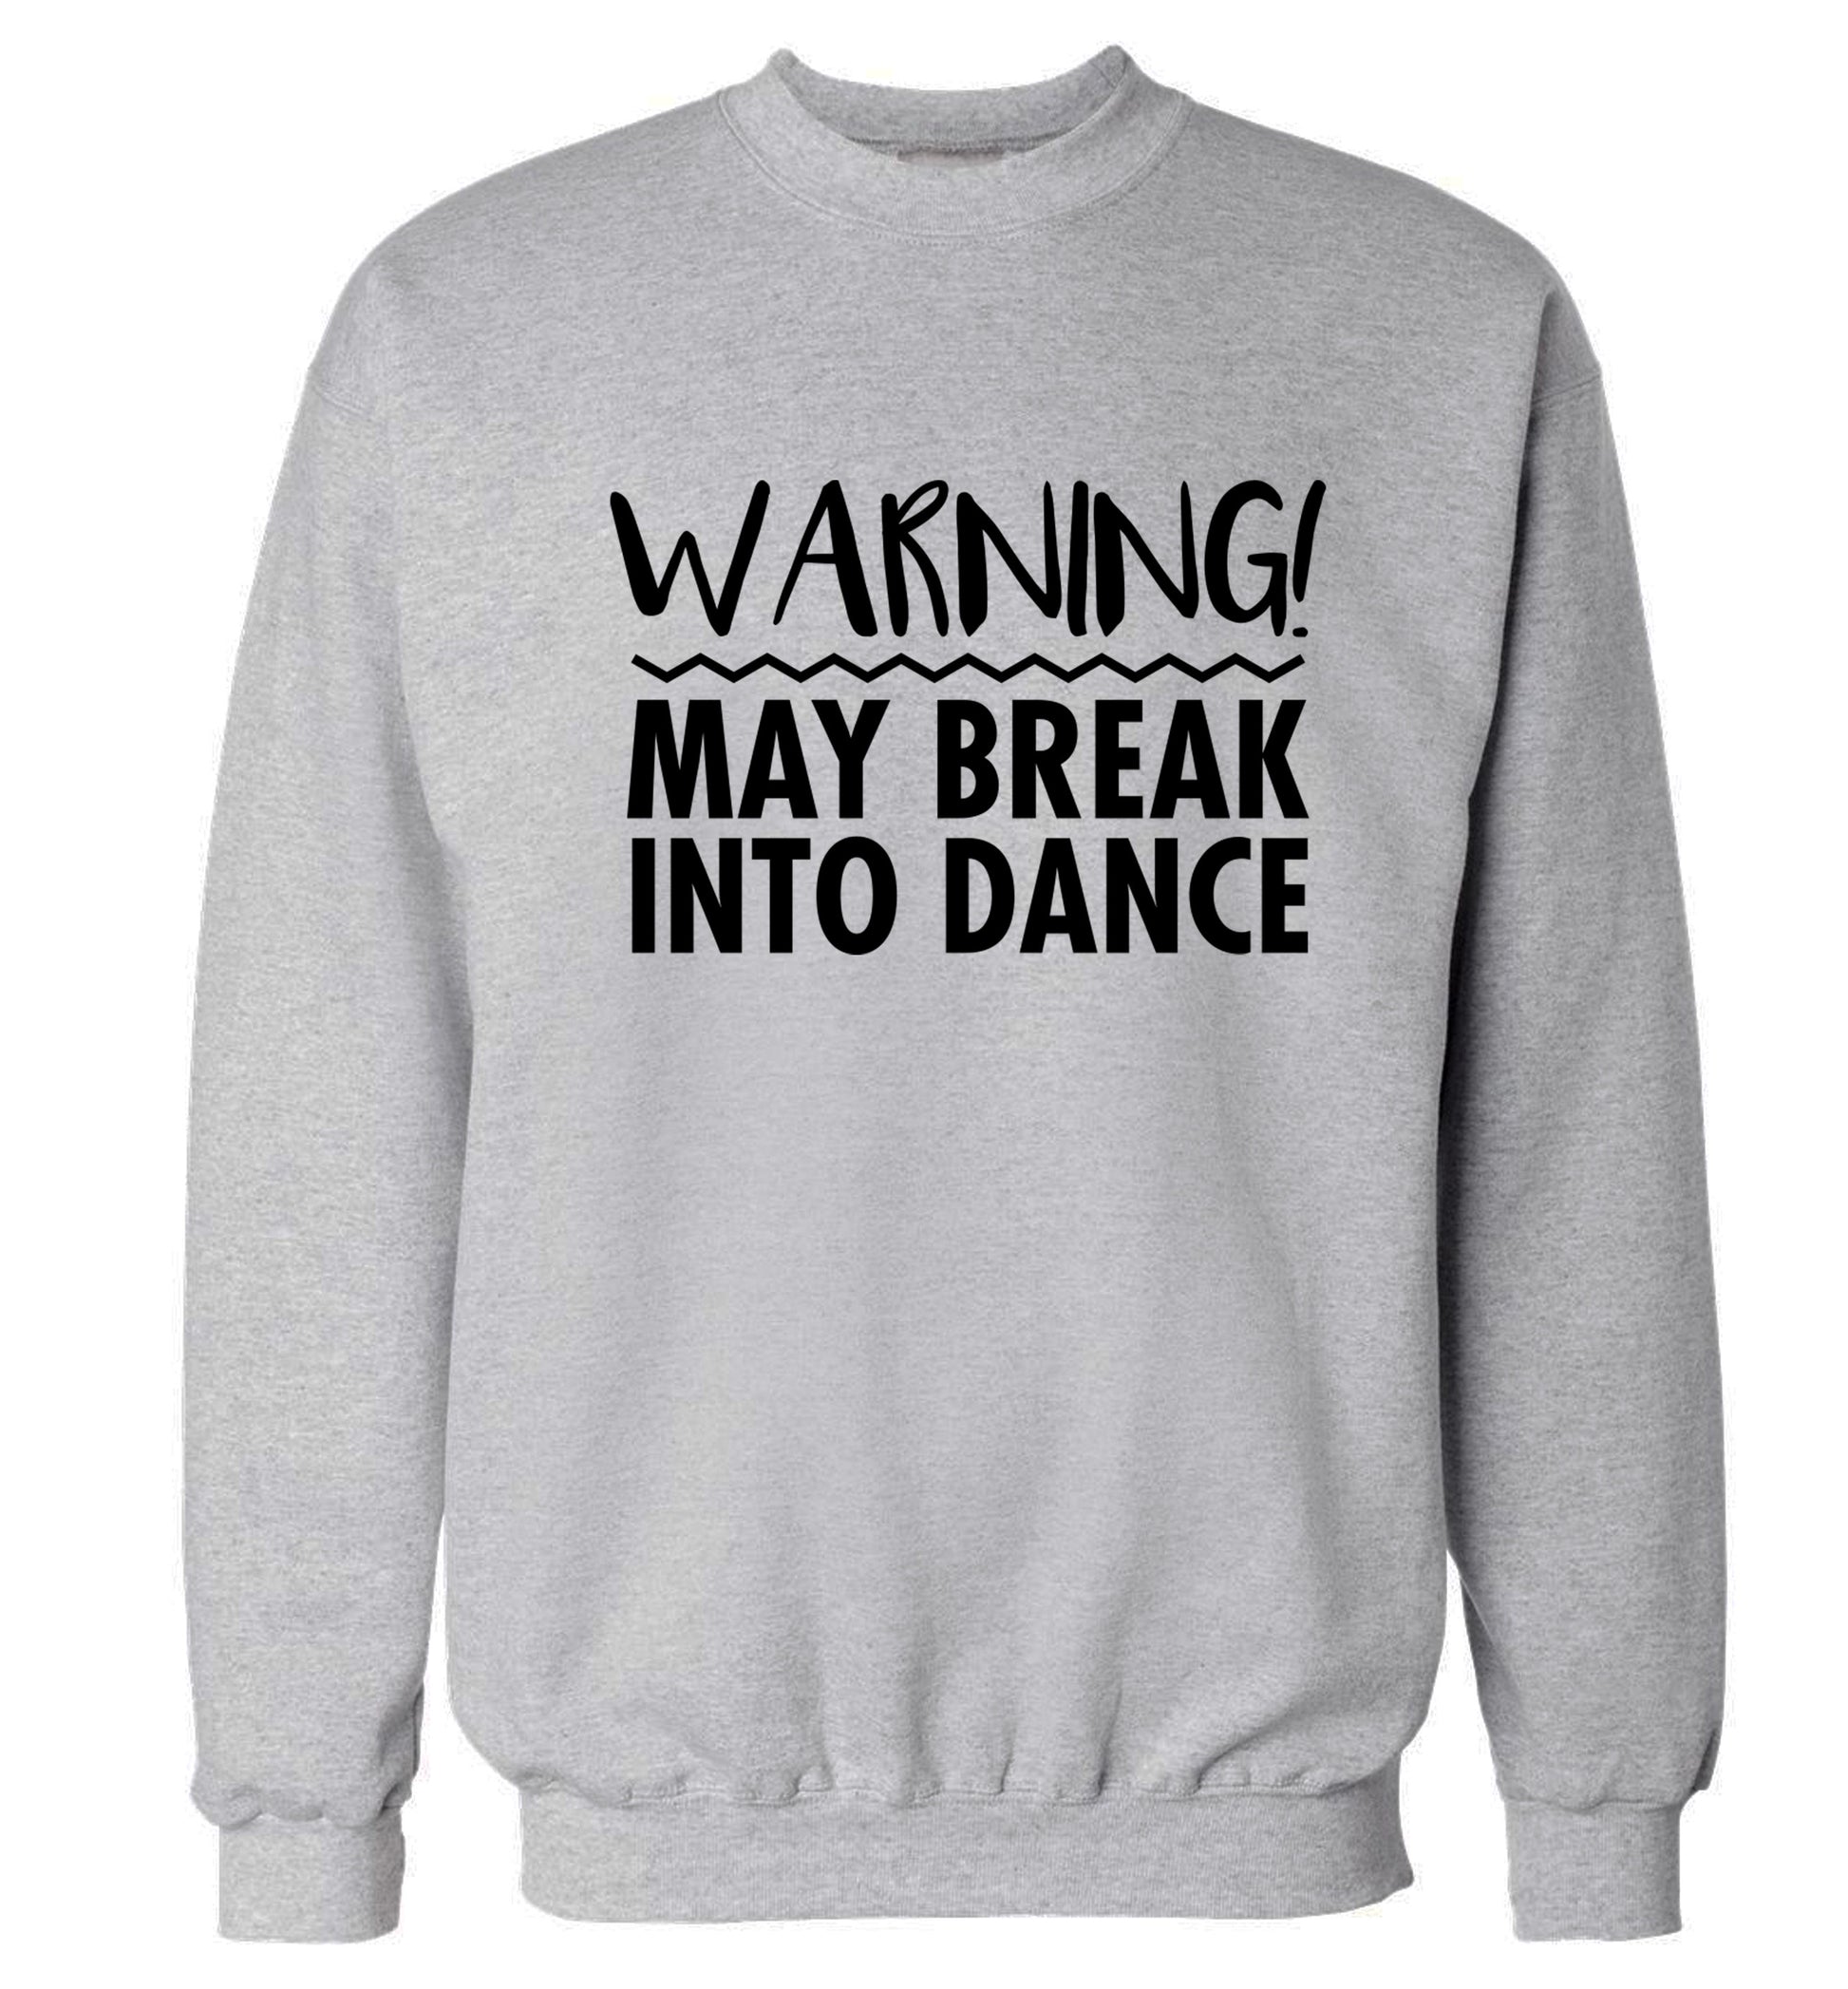 Warning may break into dance Adult's unisex grey Sweater 2XL